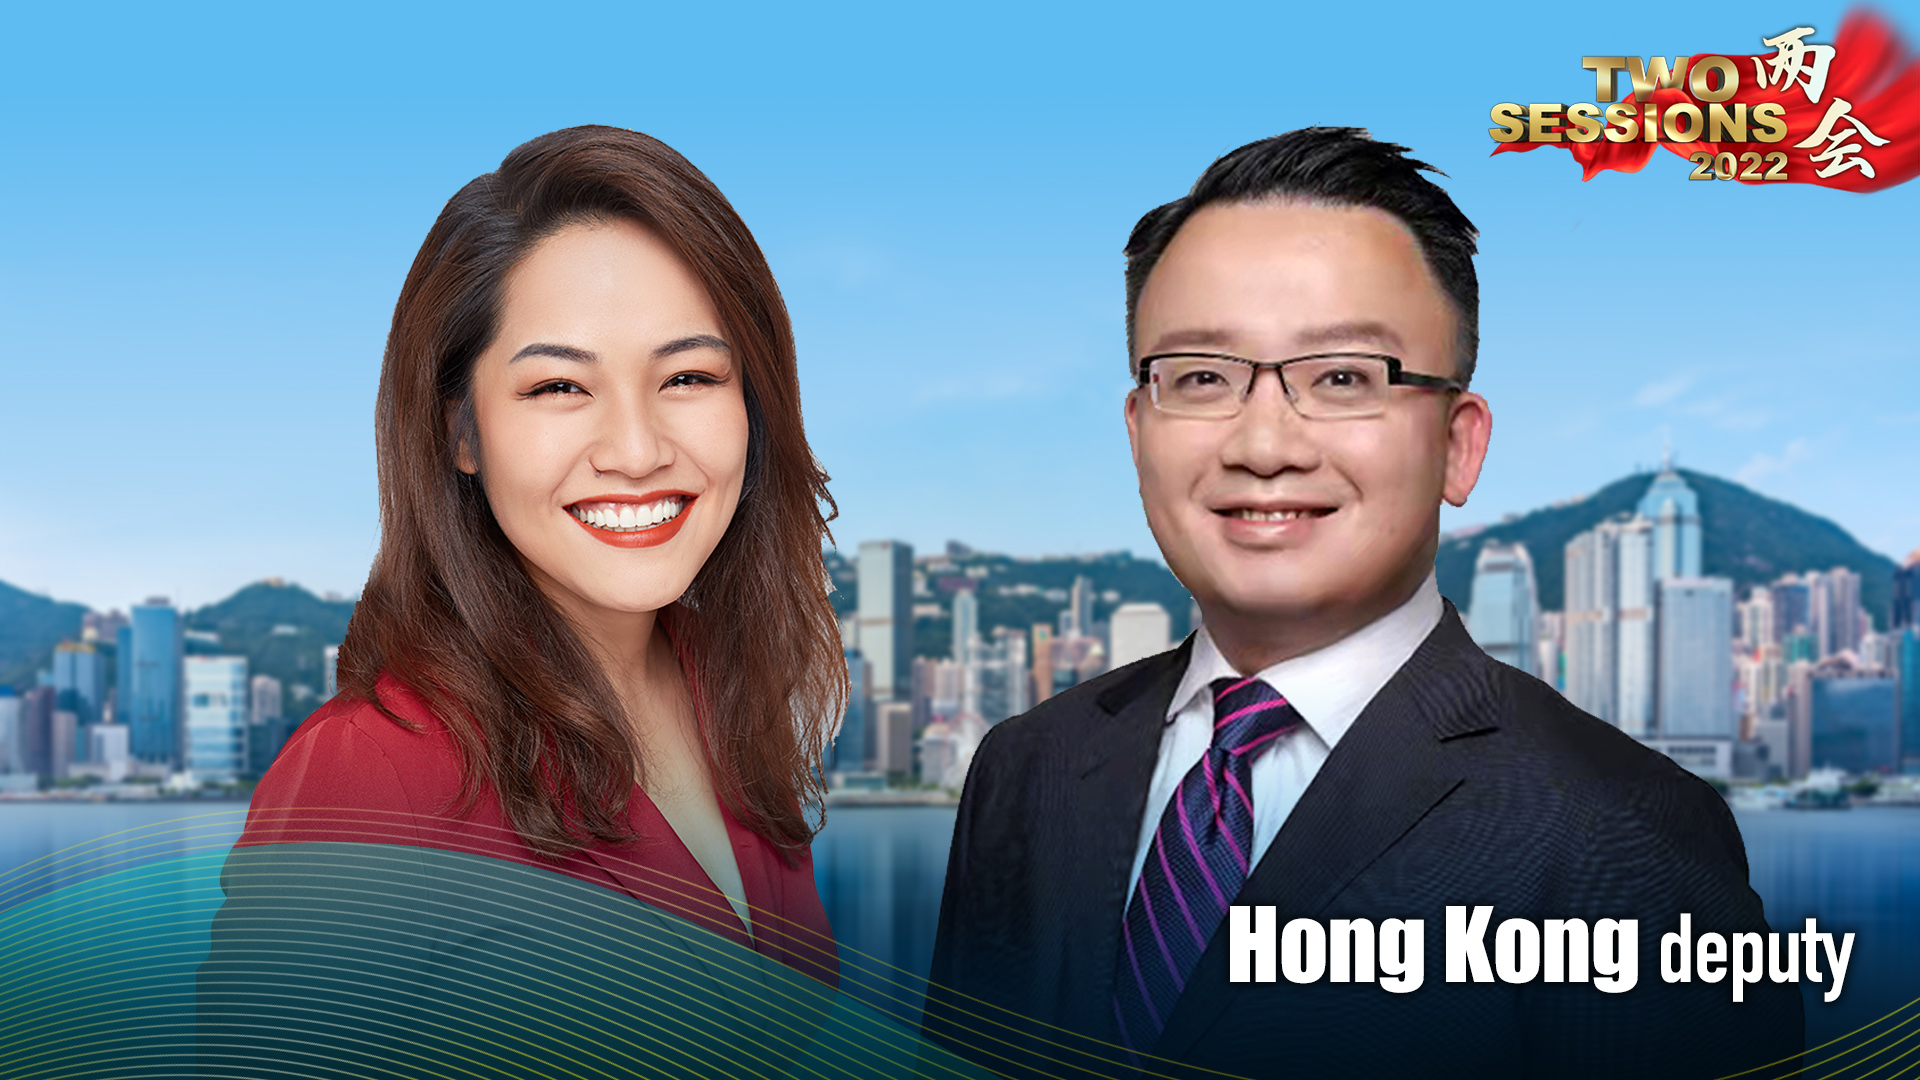 Hong Kong deputy to NPC explains HK's system, history and future - CGTN